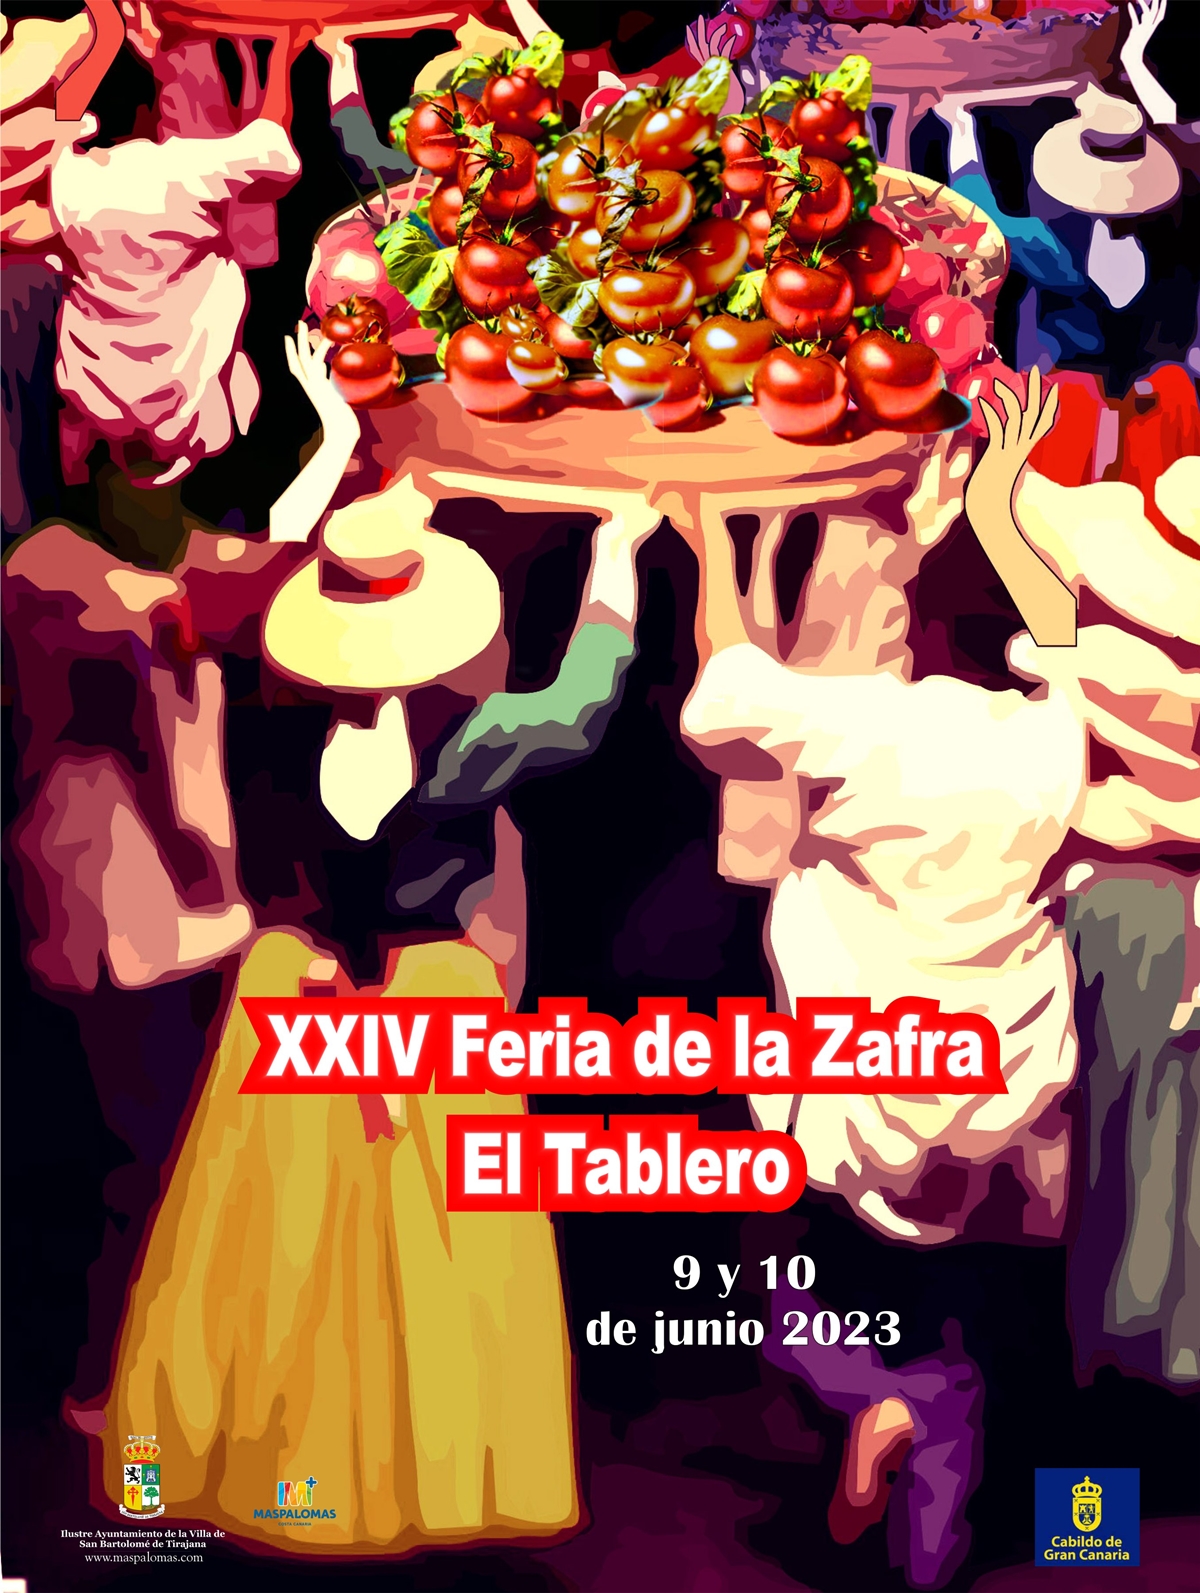 XXIv Feria de la Zafra - El Tablero